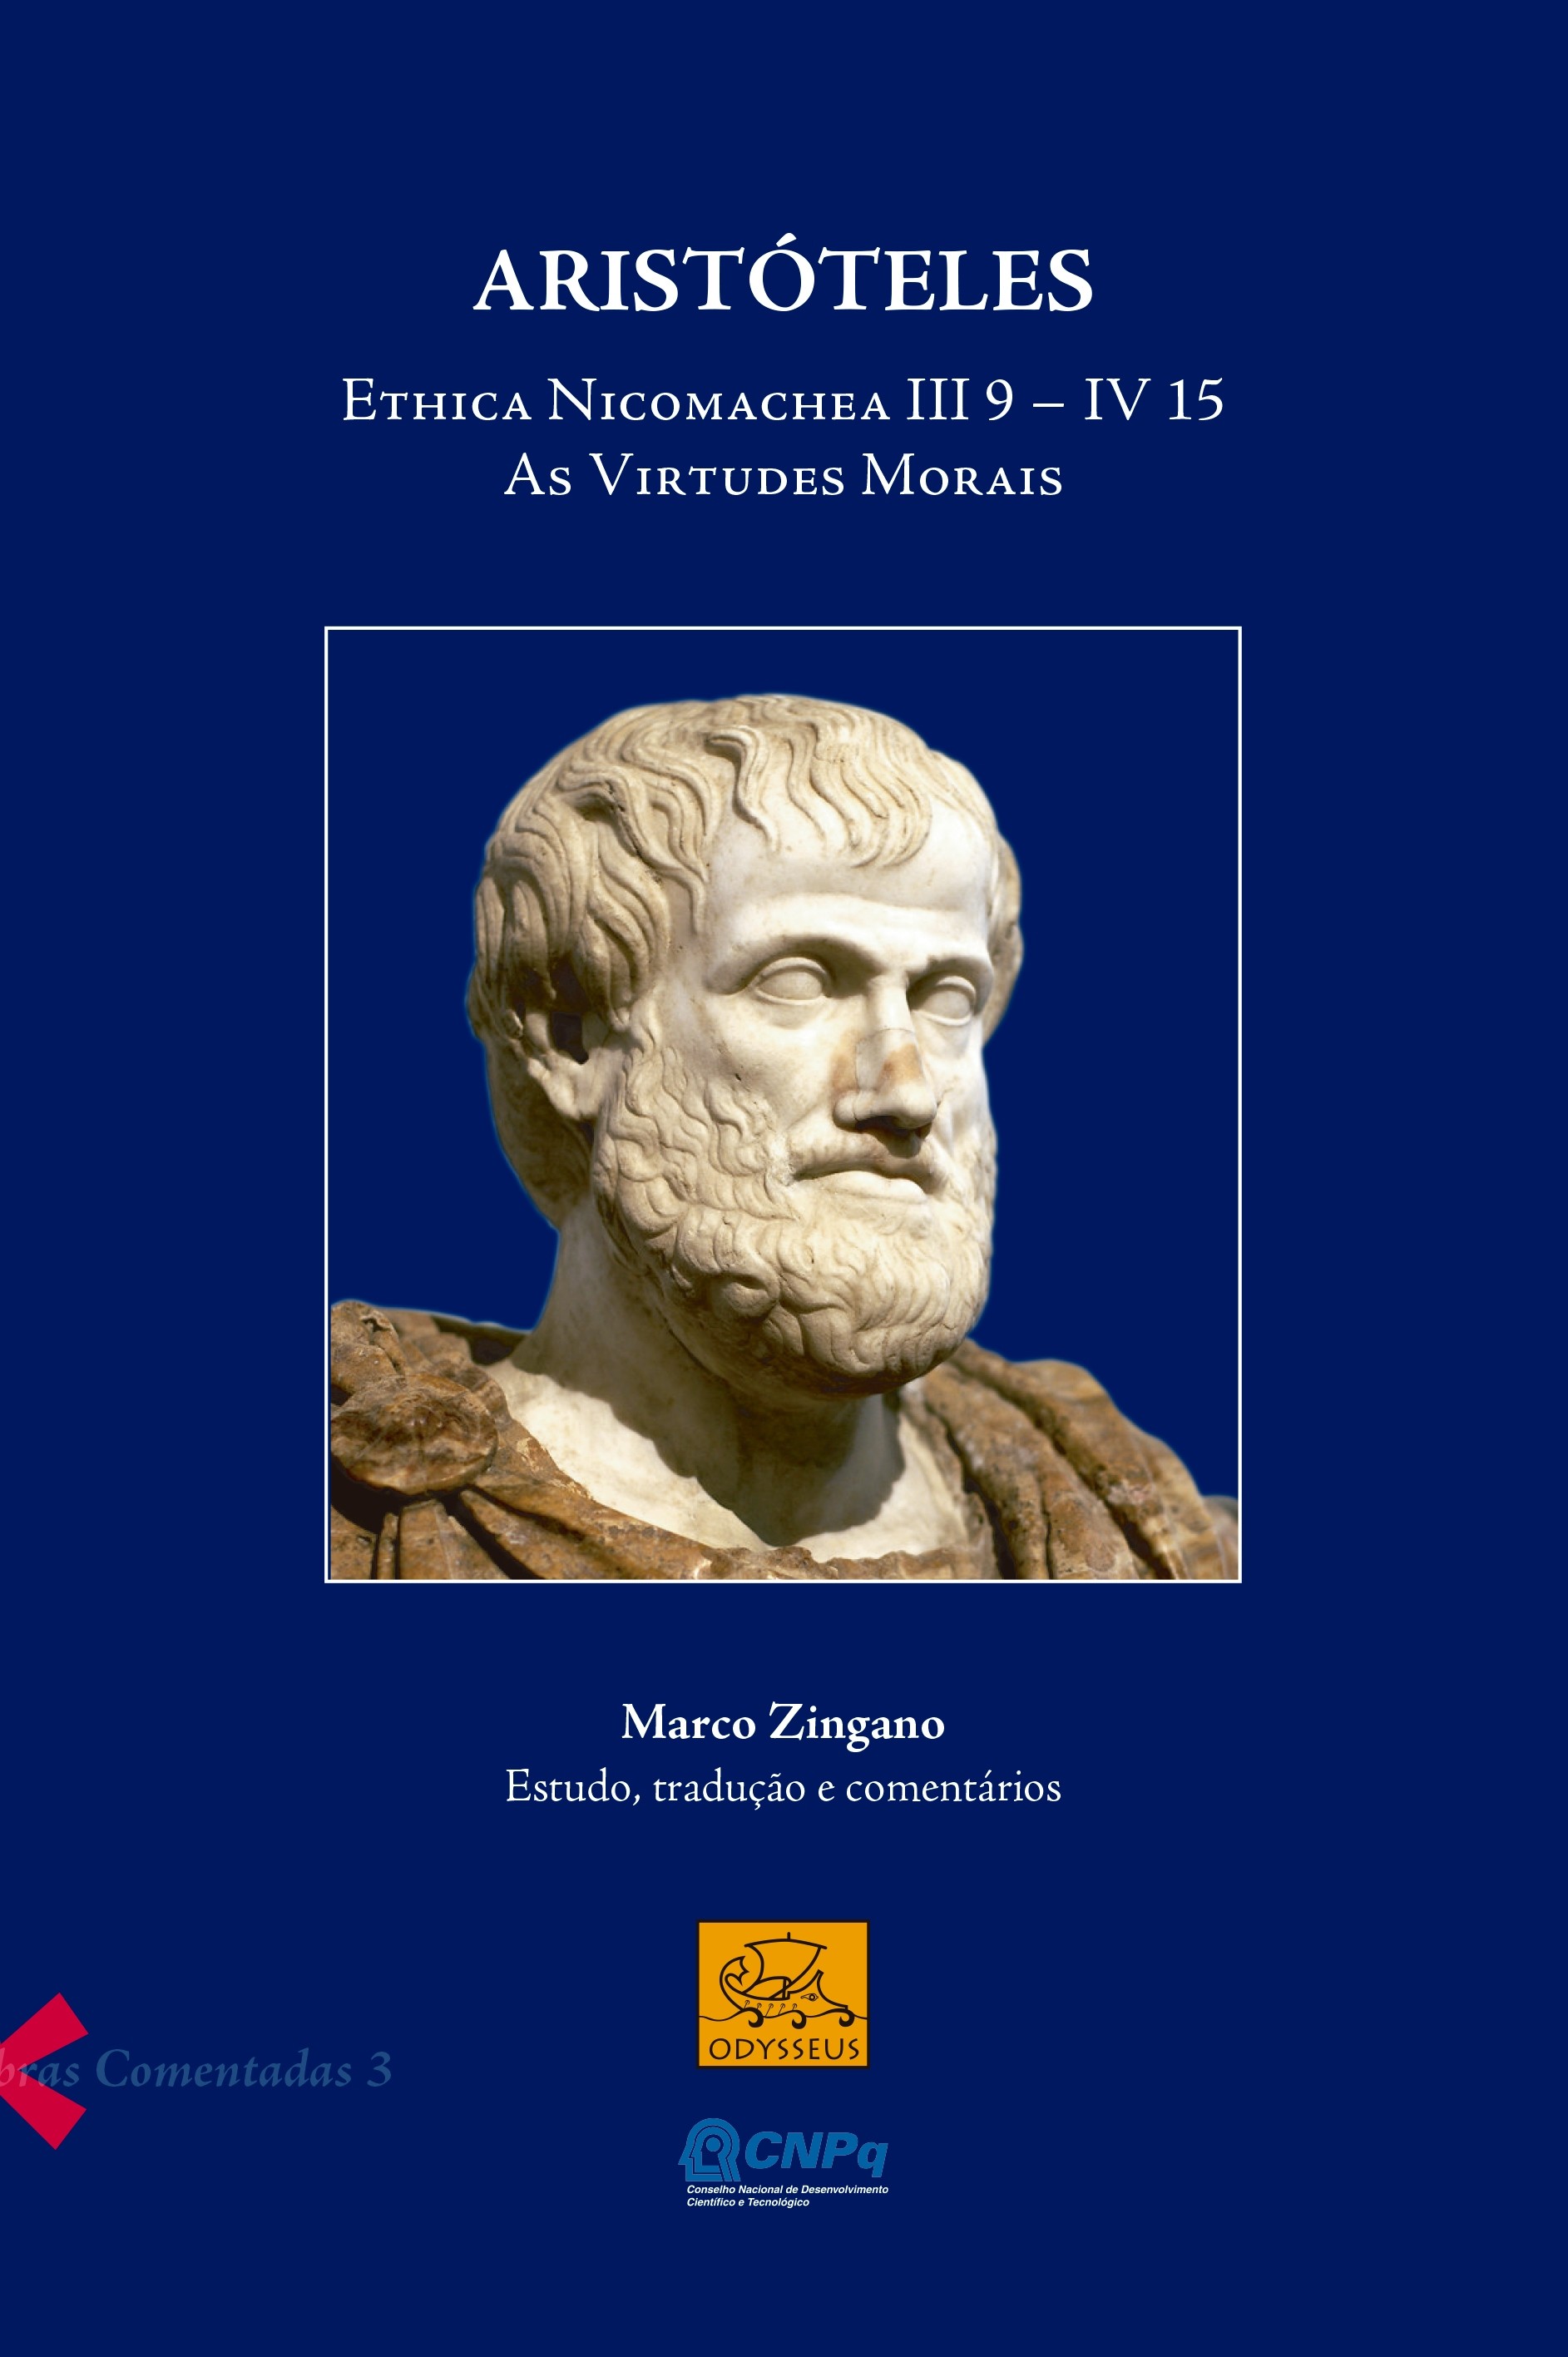  Aristóteles - Ethica Nicomachea - III 9 - IV 15: As virtudes morais 